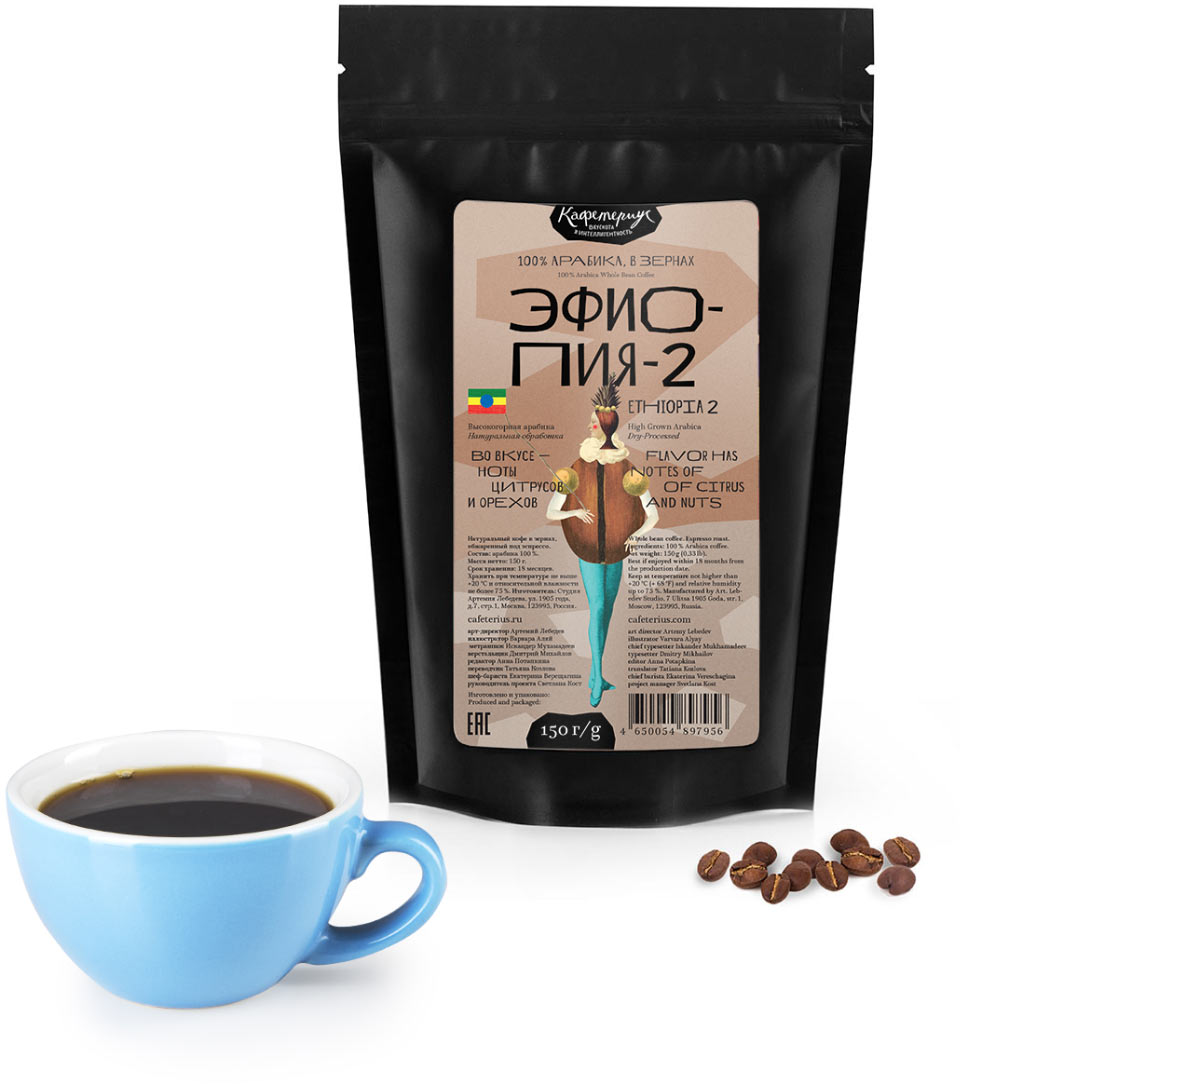 Ethiopia-2 single-origin coffee